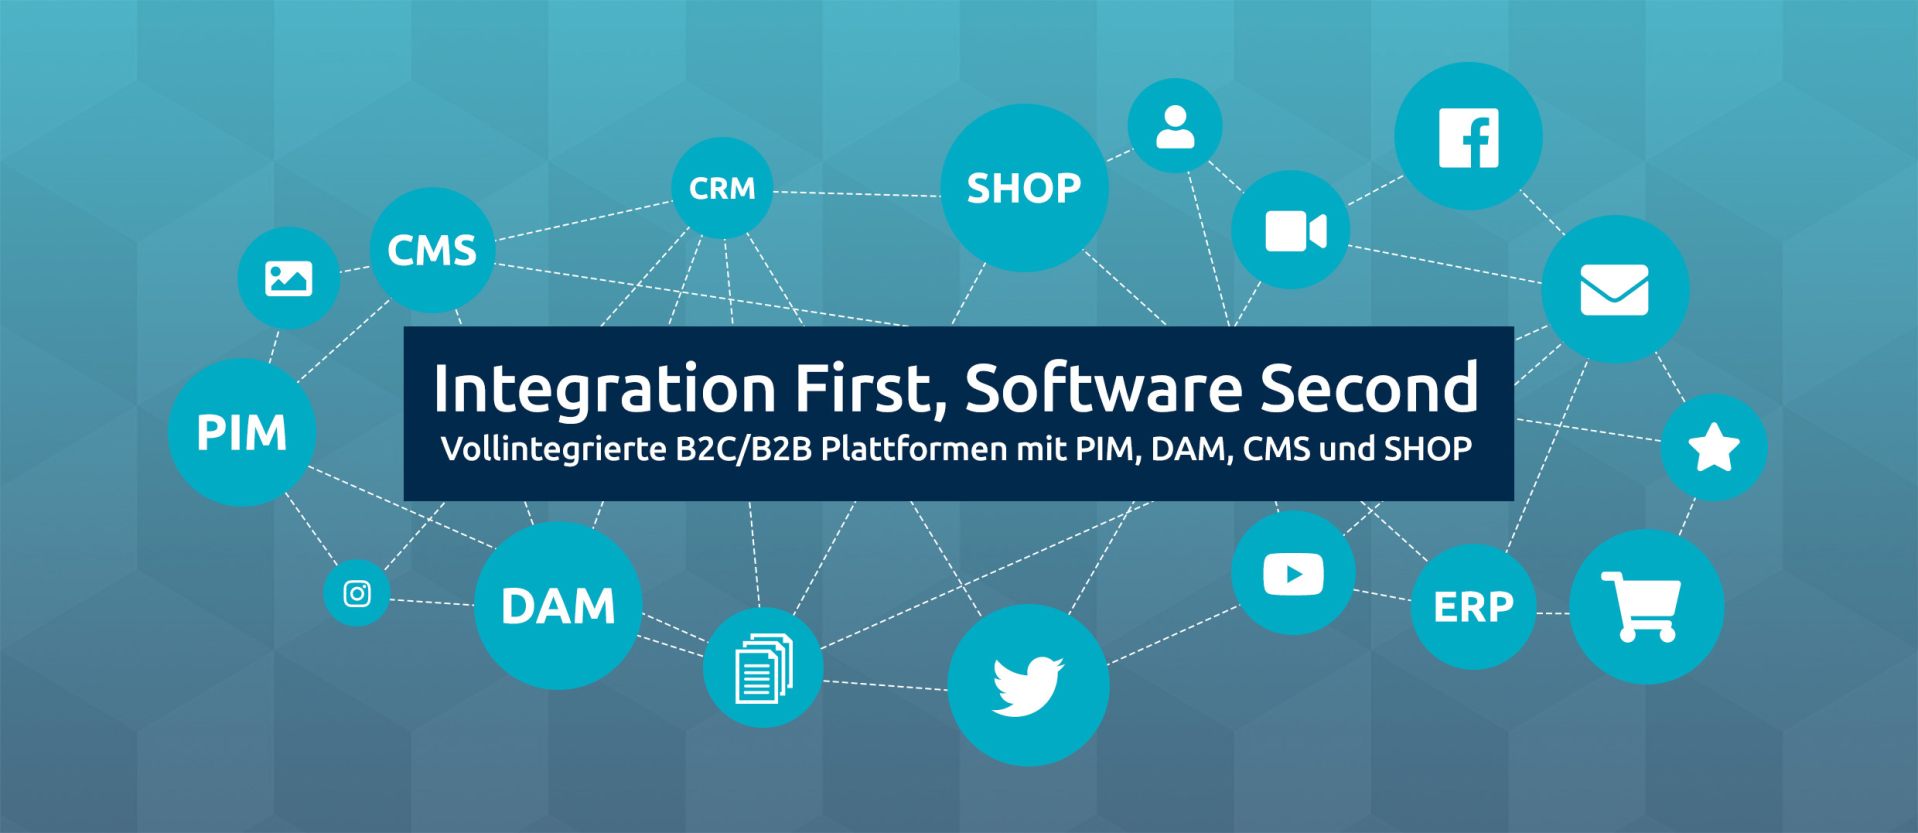 Integration First, Software Second